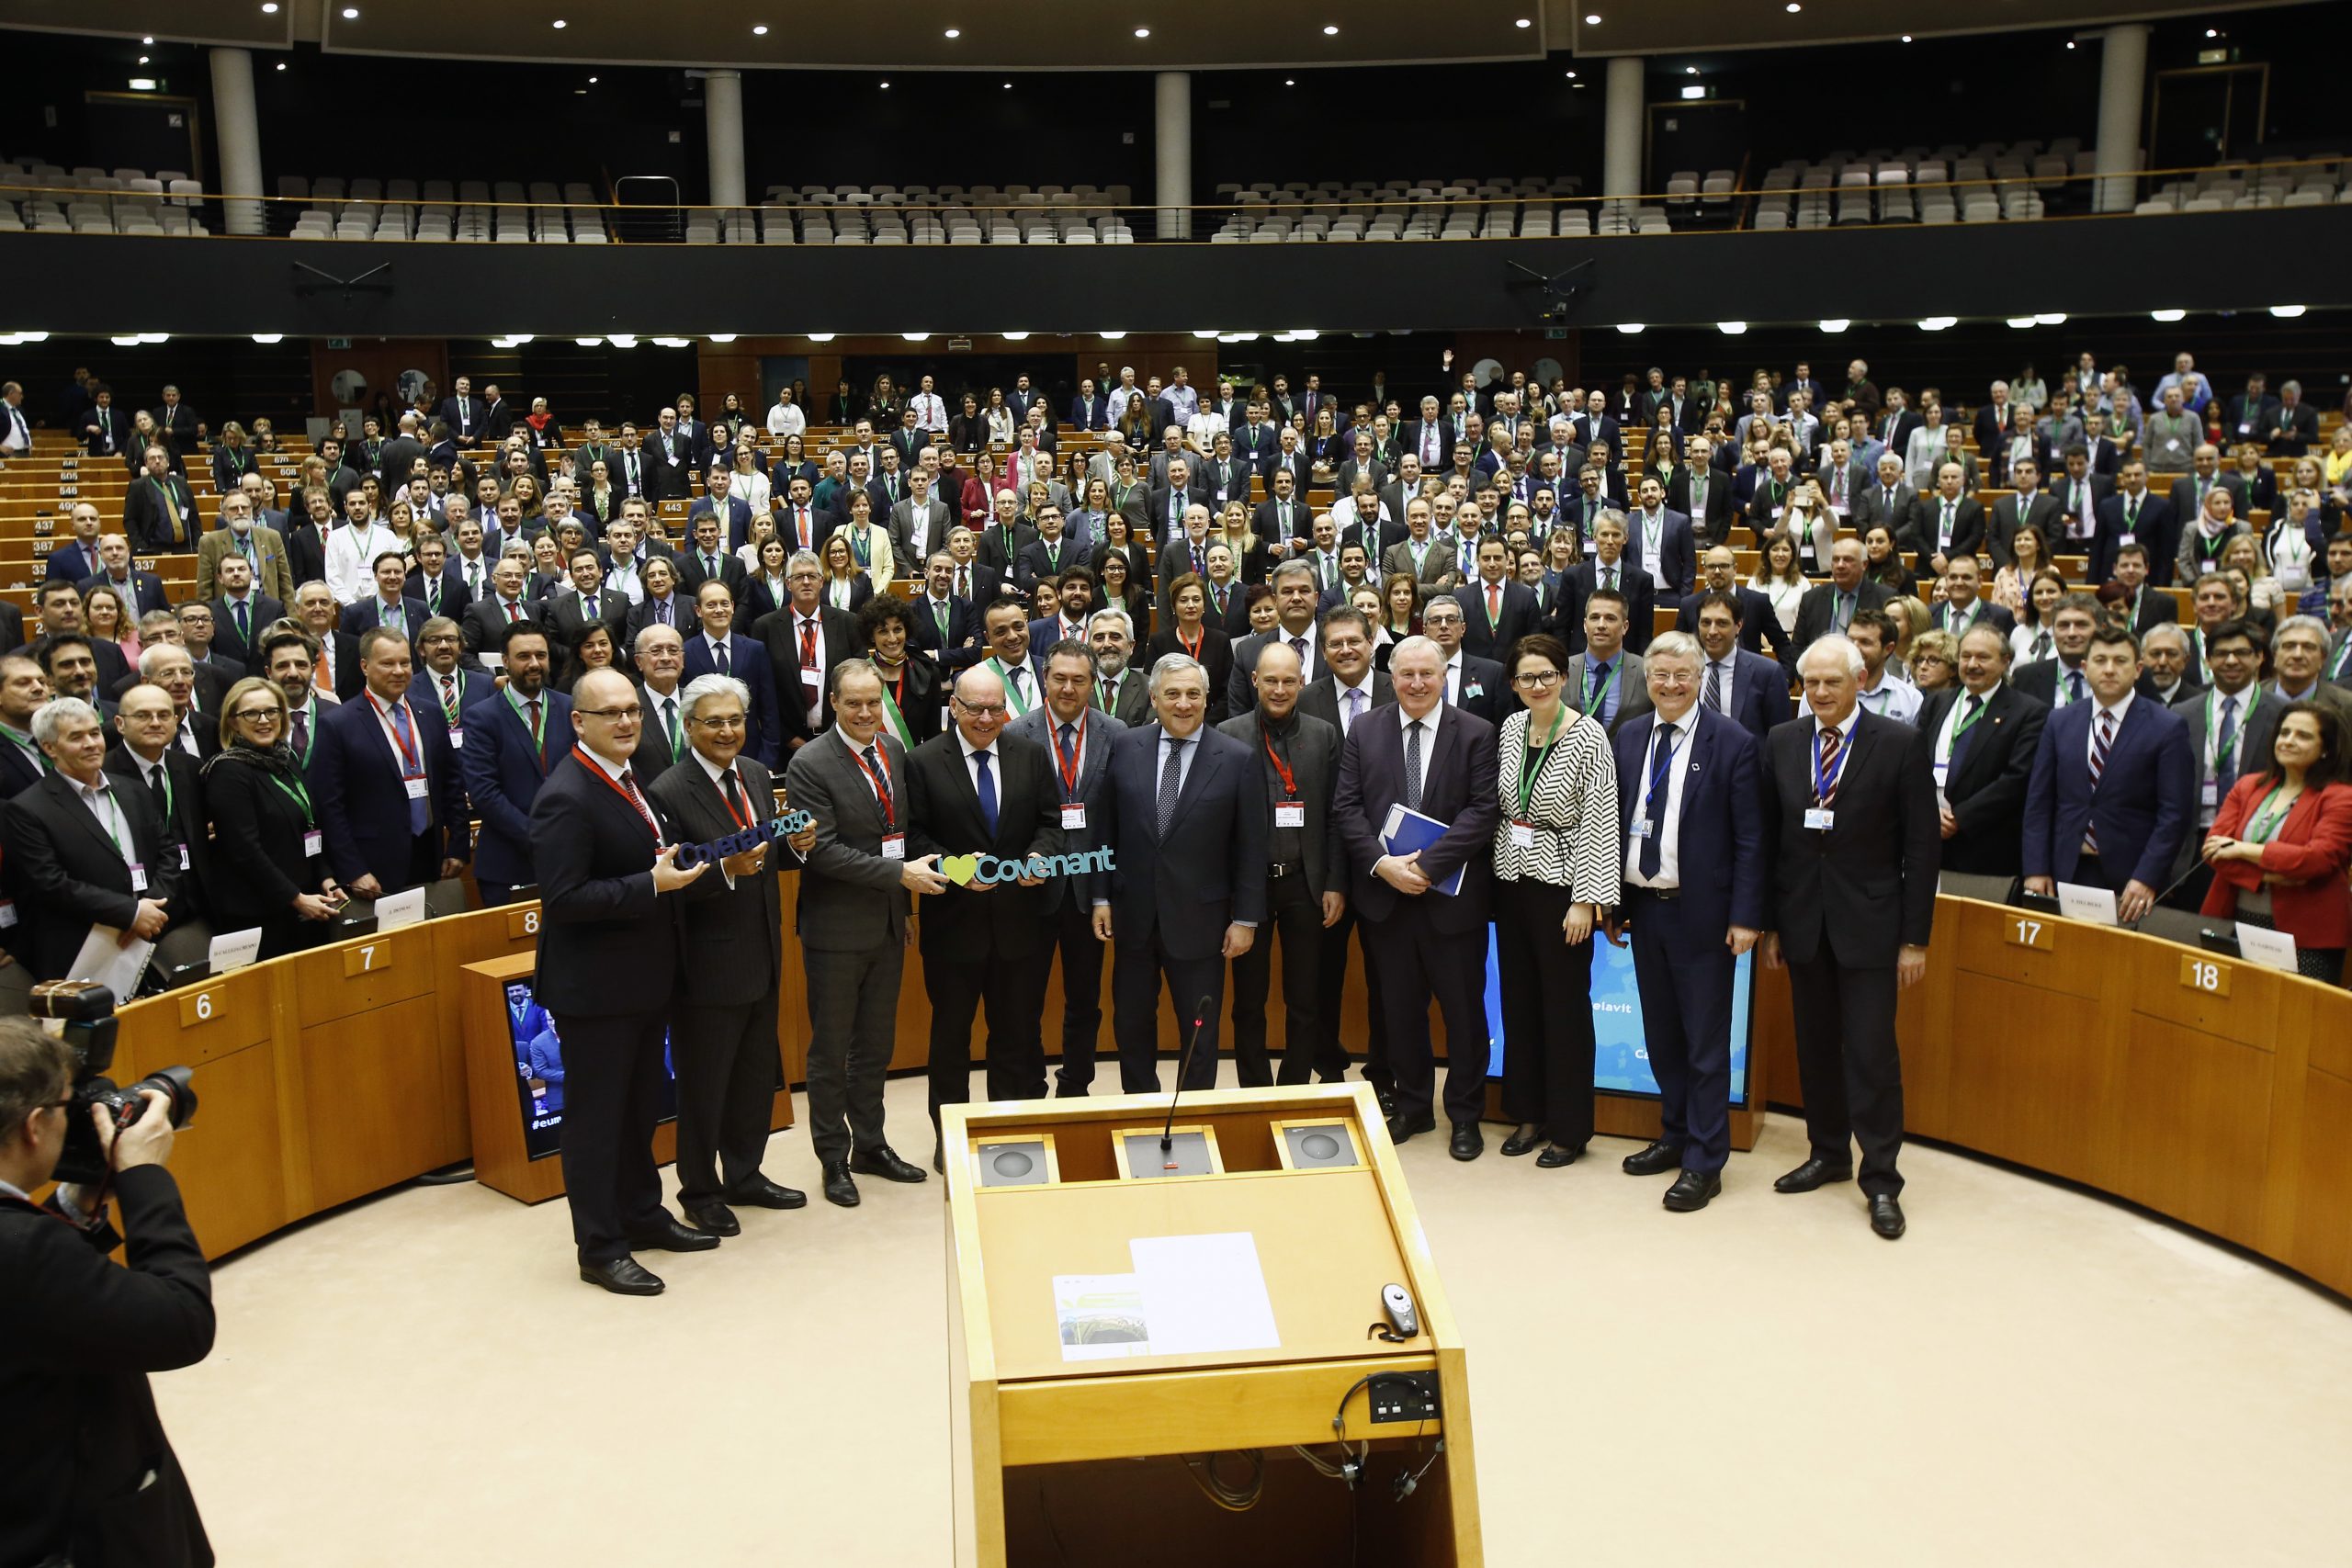 European Covenant of Mayors 2018 Ceremony